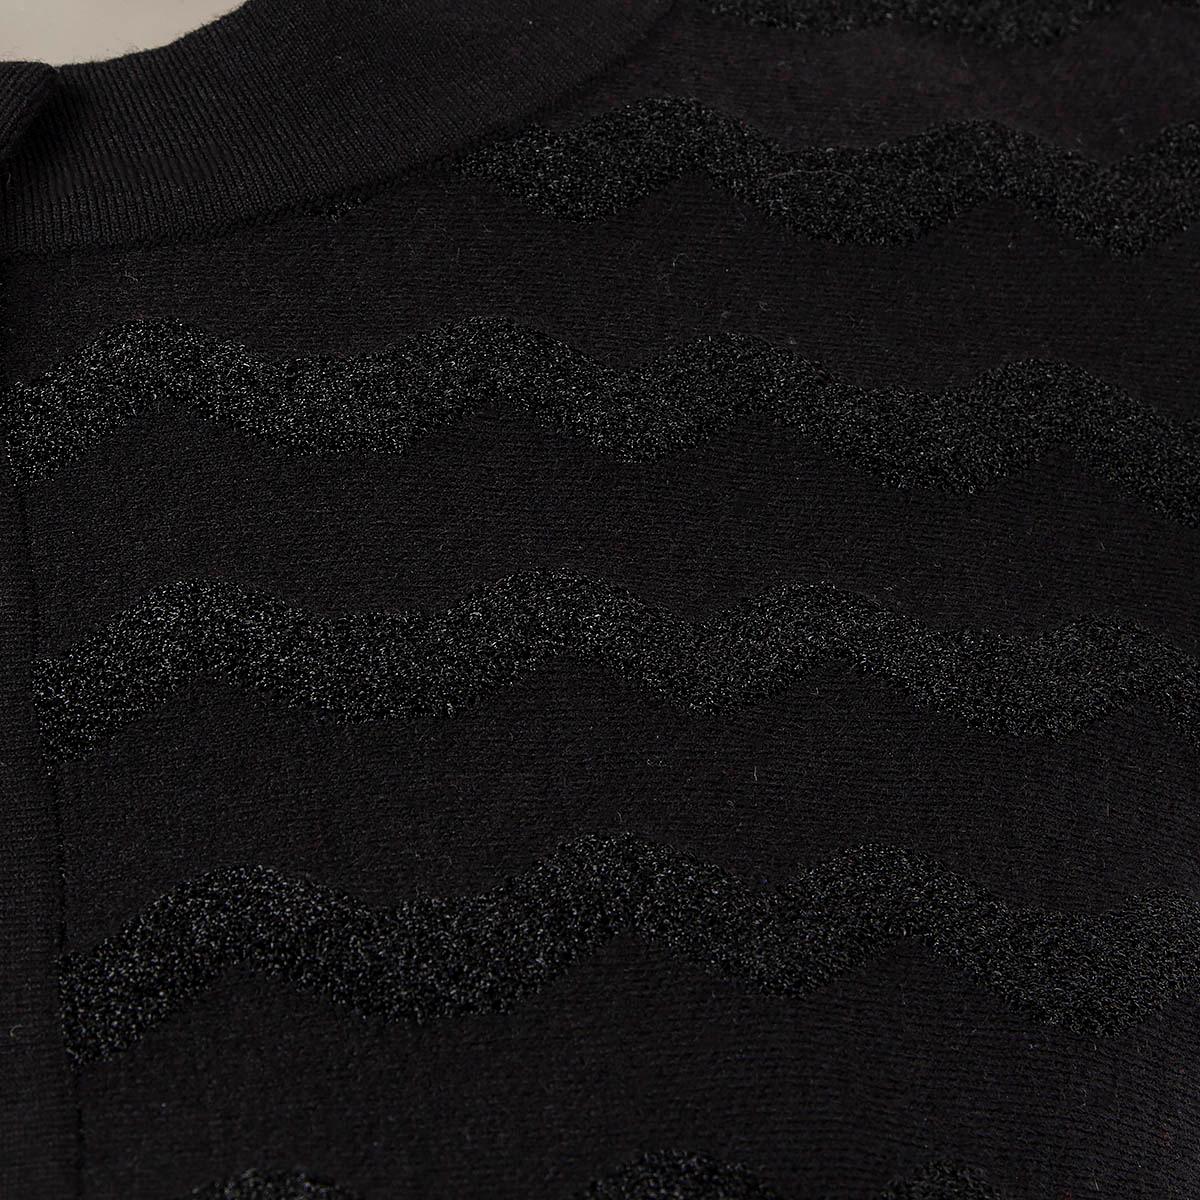 ALAIA black wool blend SCALLOPED BOLERO Cardigan Sweater 42 L For Sale 1